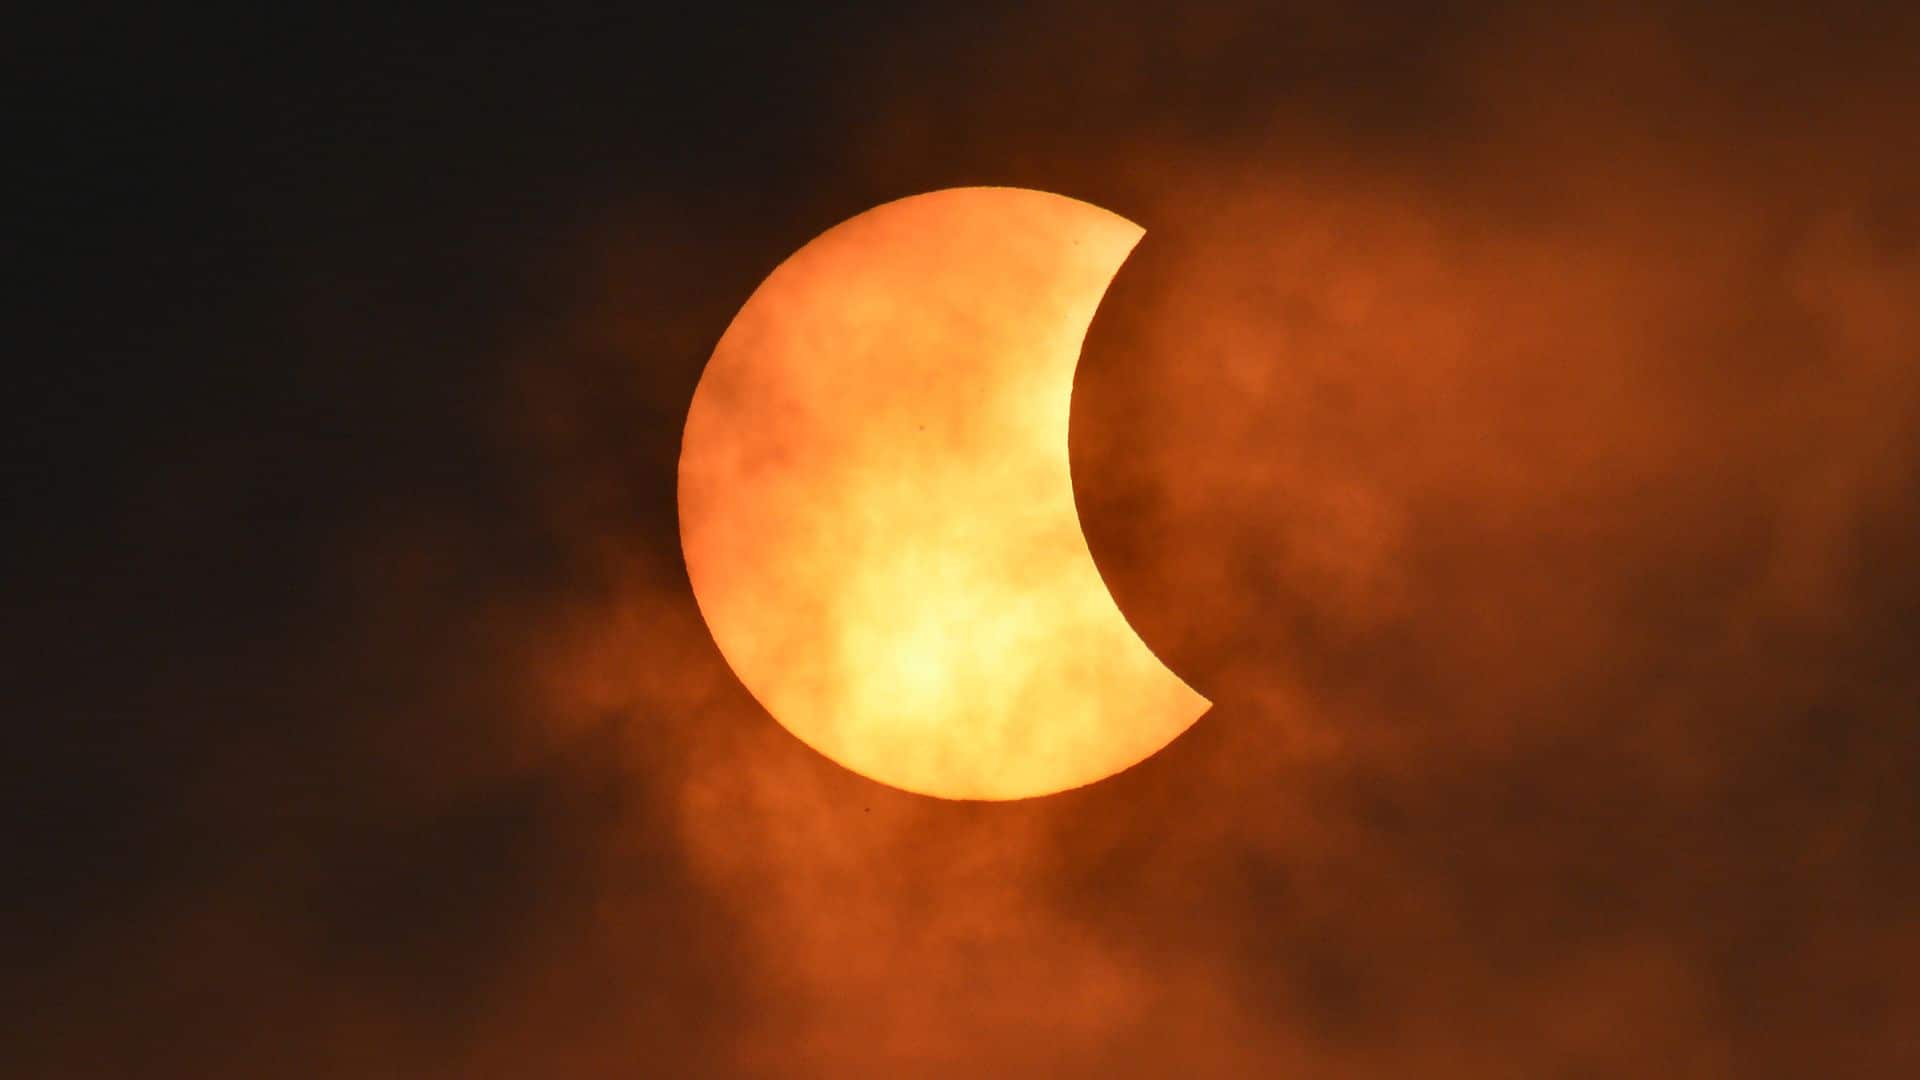 NASA's SDO recorded the peak of the solar eclipse in space